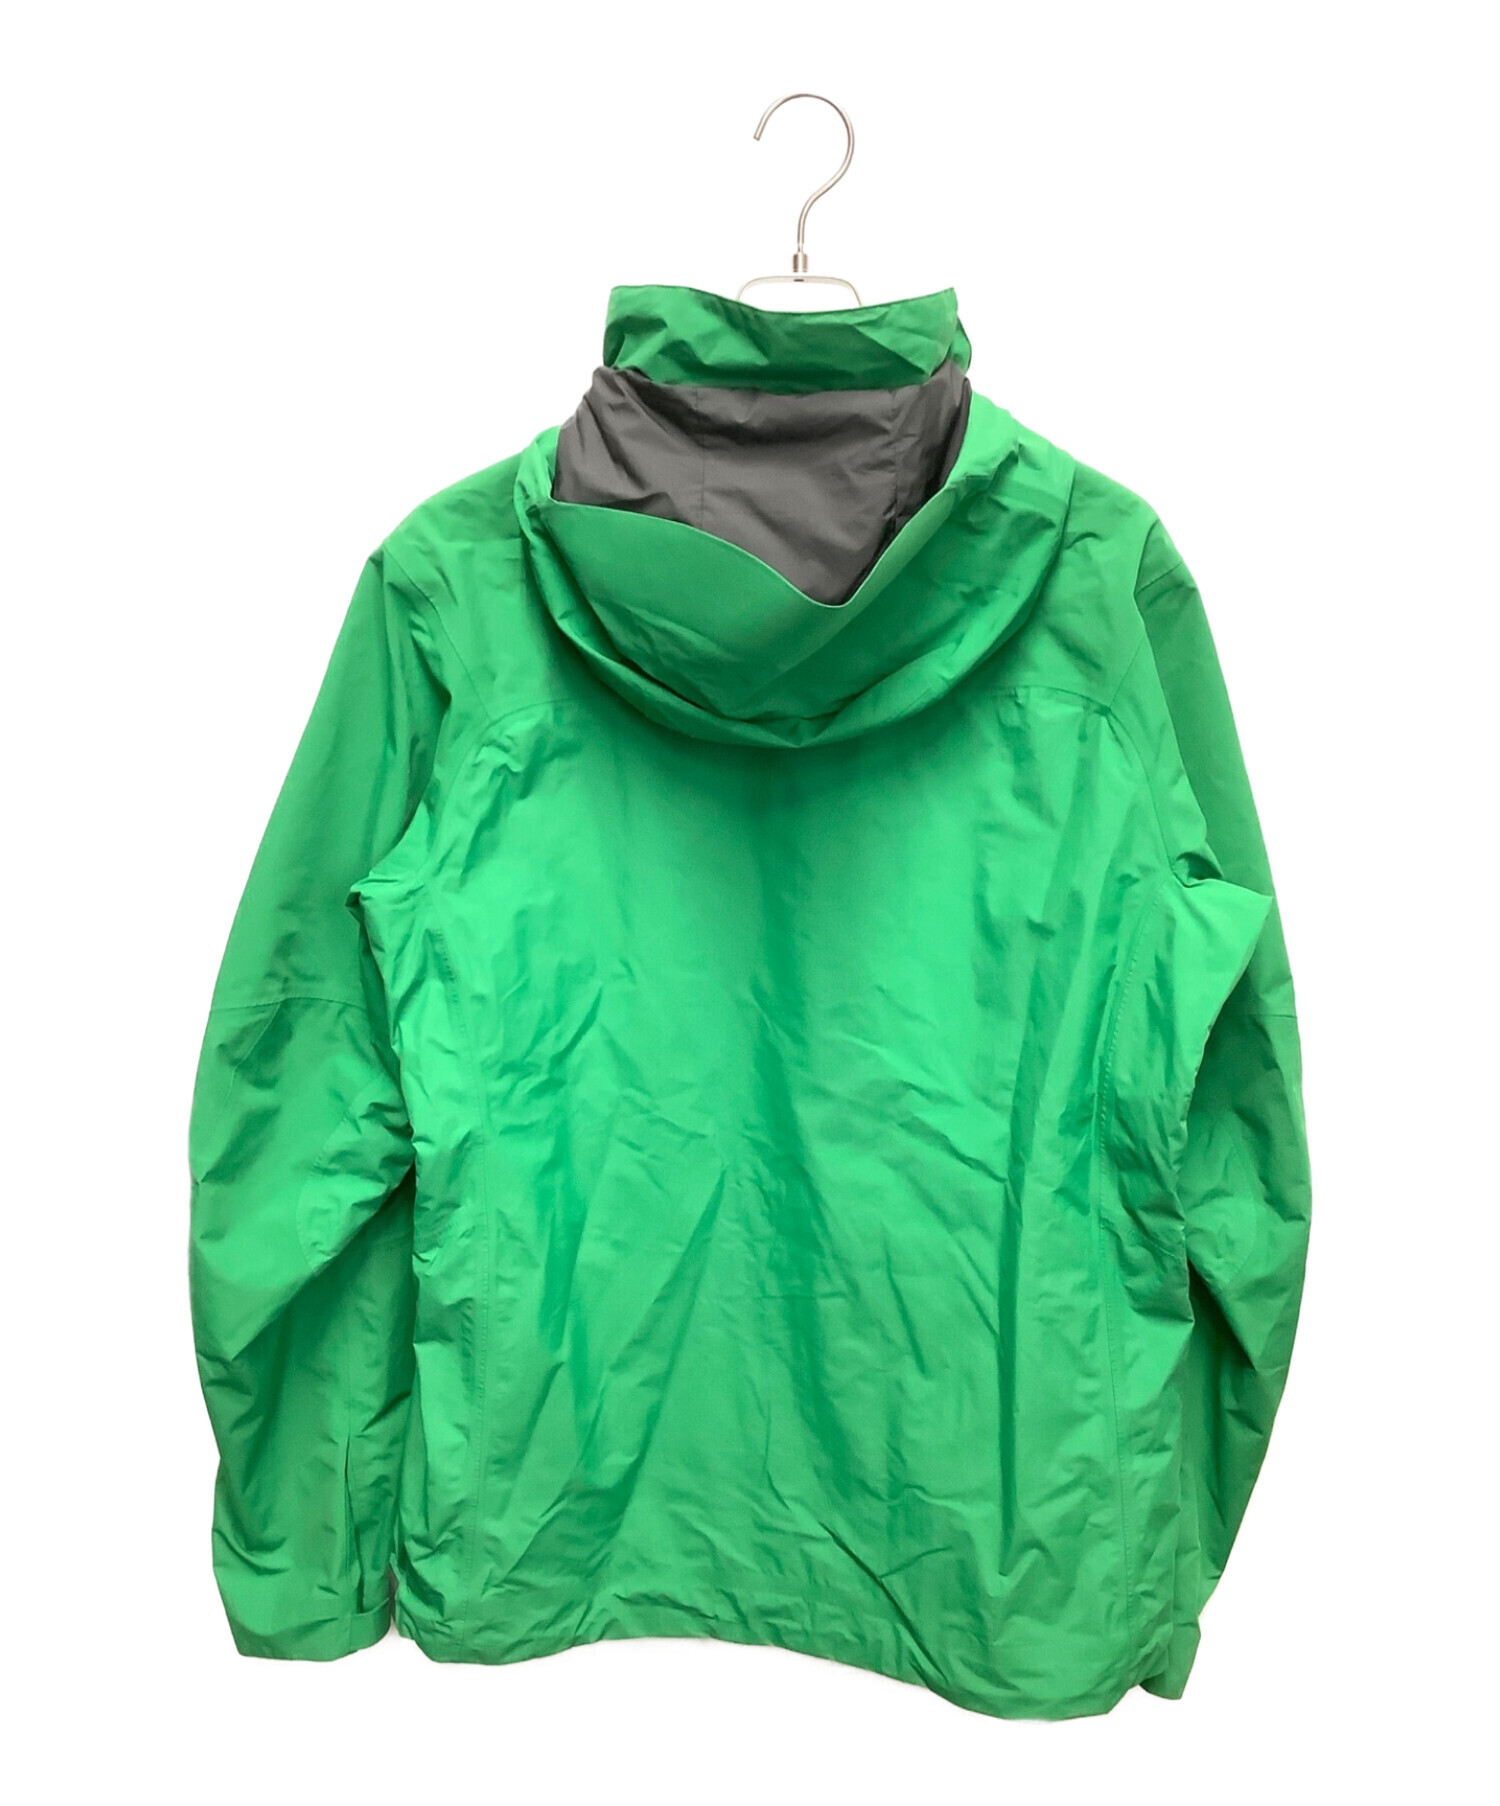 Patagonia (パタゴニア) ピオレットジャケット グリーン サイズ:M